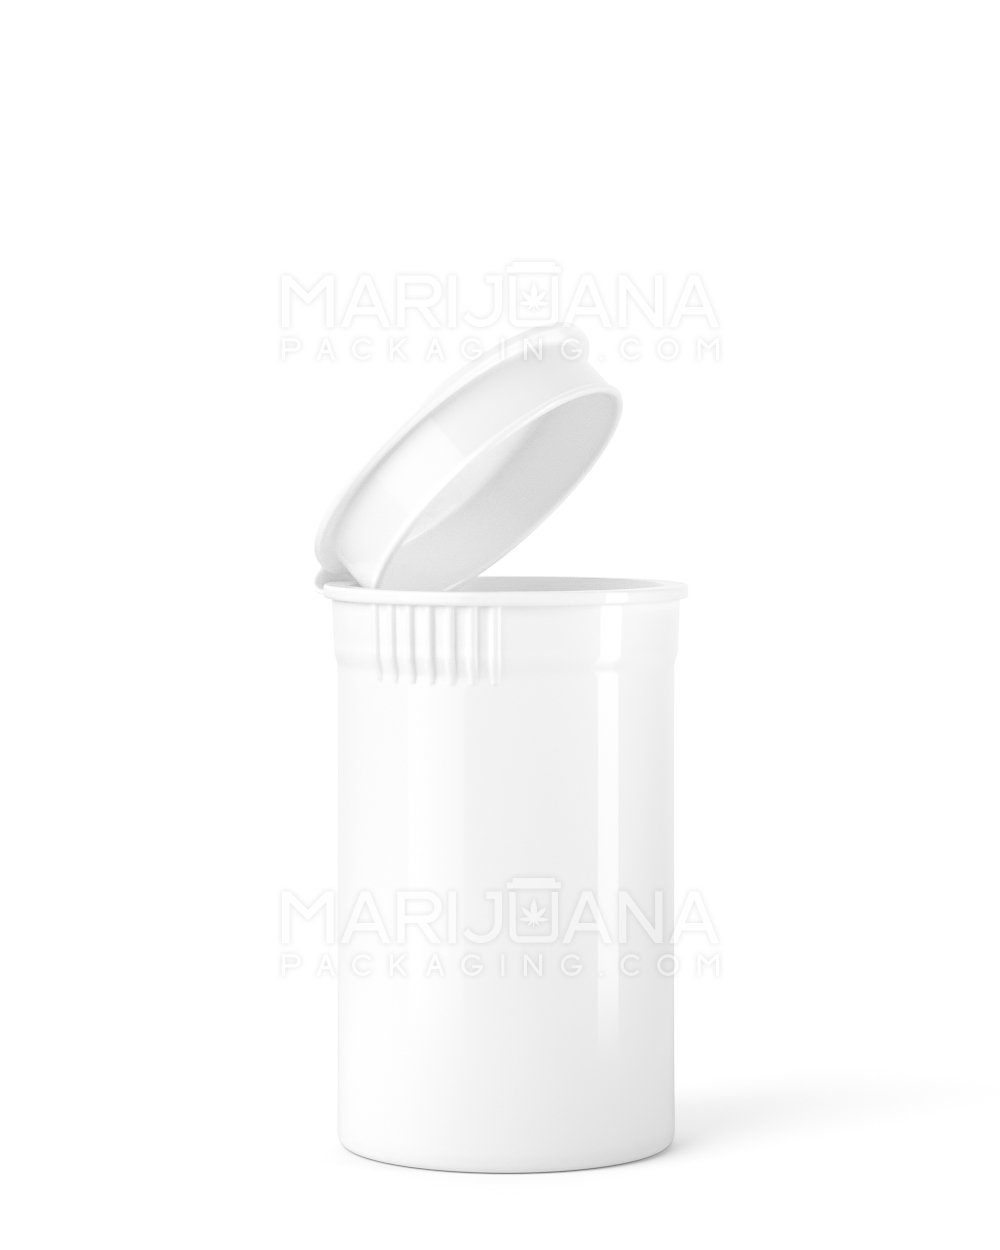 Child Resistant Opaque White Pop Top Bottles | 6dr - 1g | Sample - 1